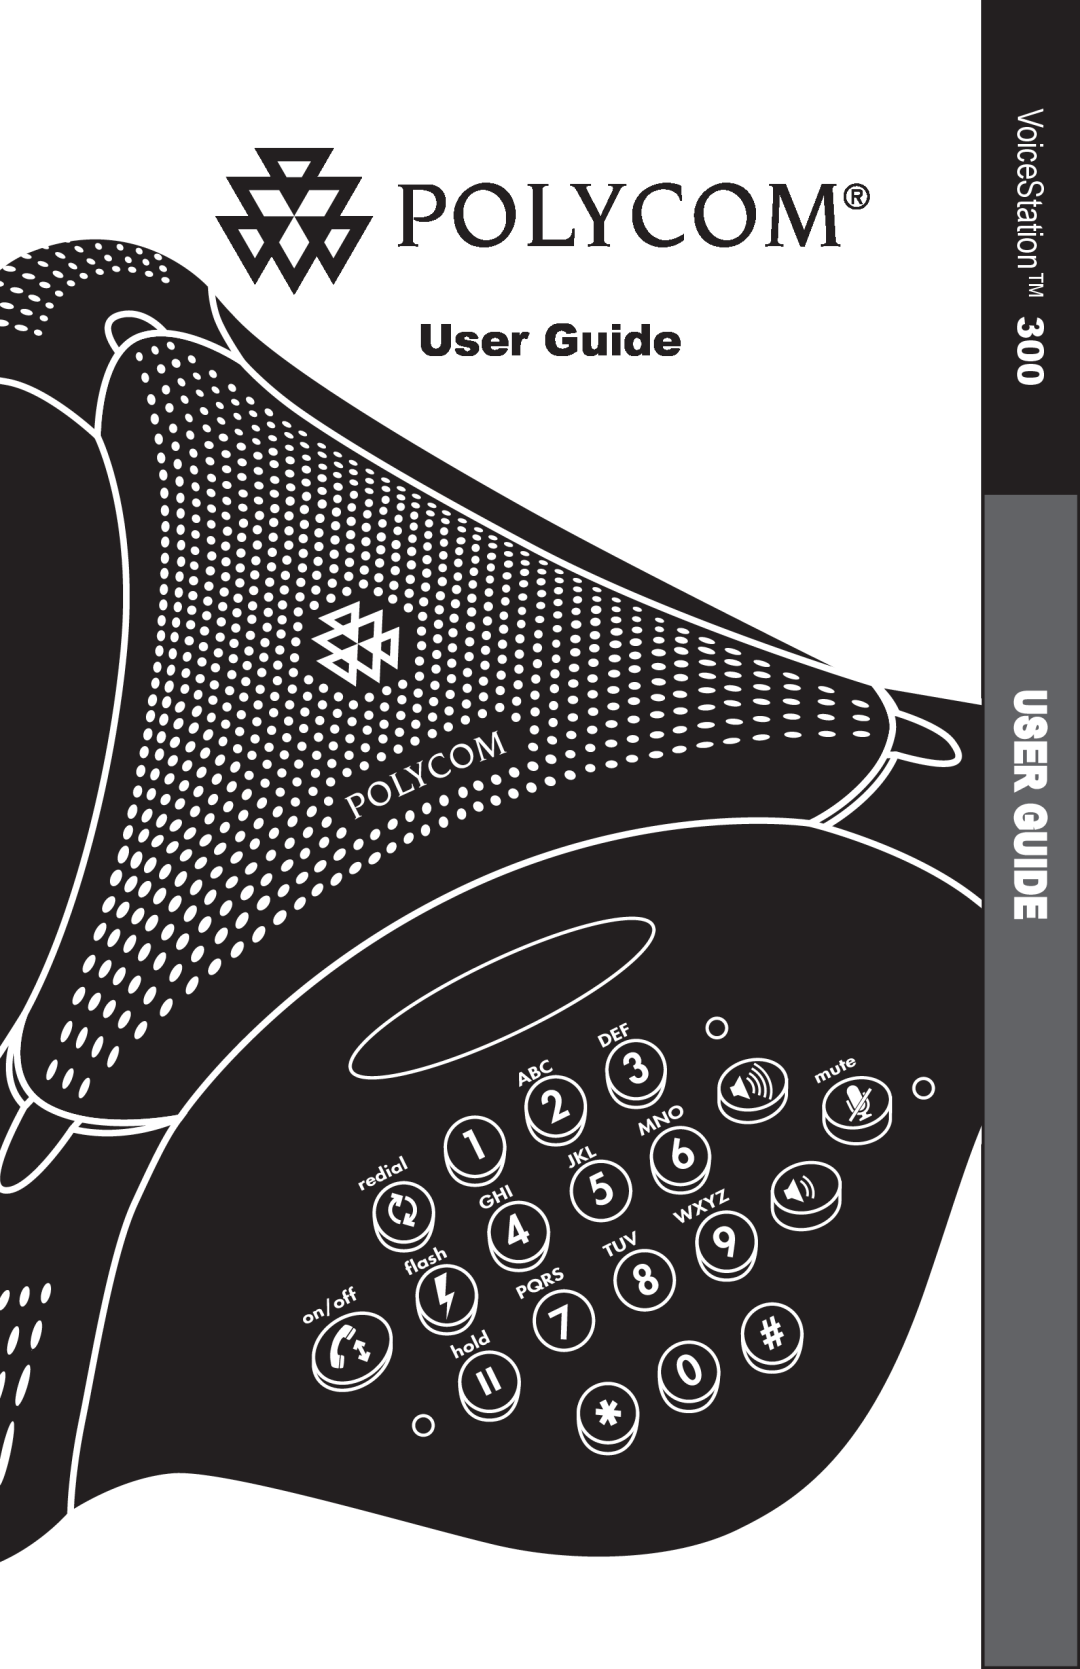 Polycom TM300 manual User Guide, VoiceStation 